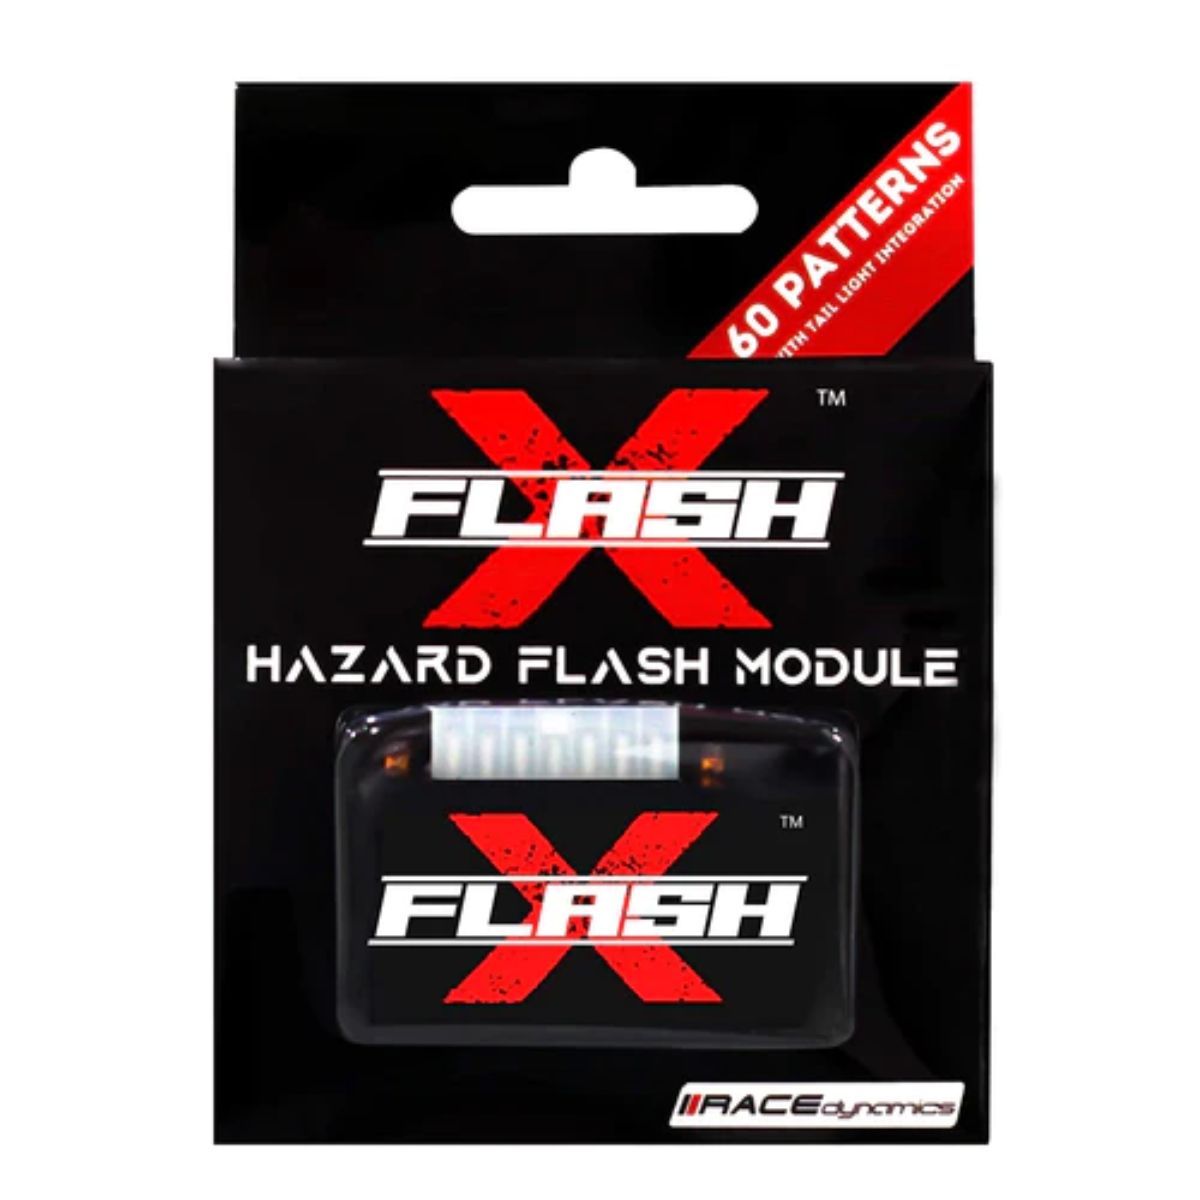 FlashX Hazard Flash Module for Hero 1